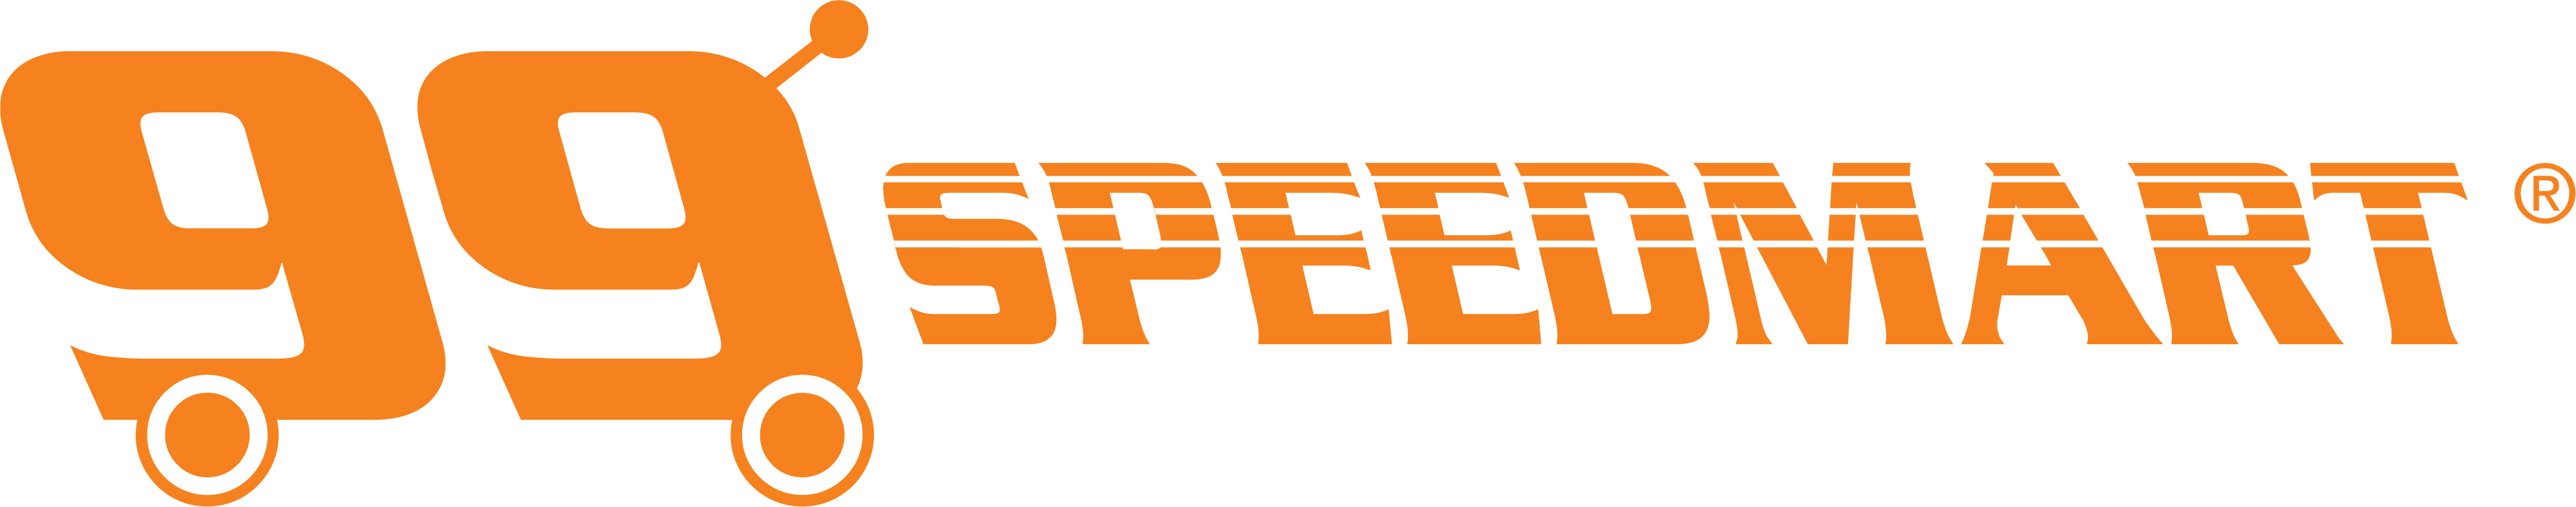 99 speedmart penang